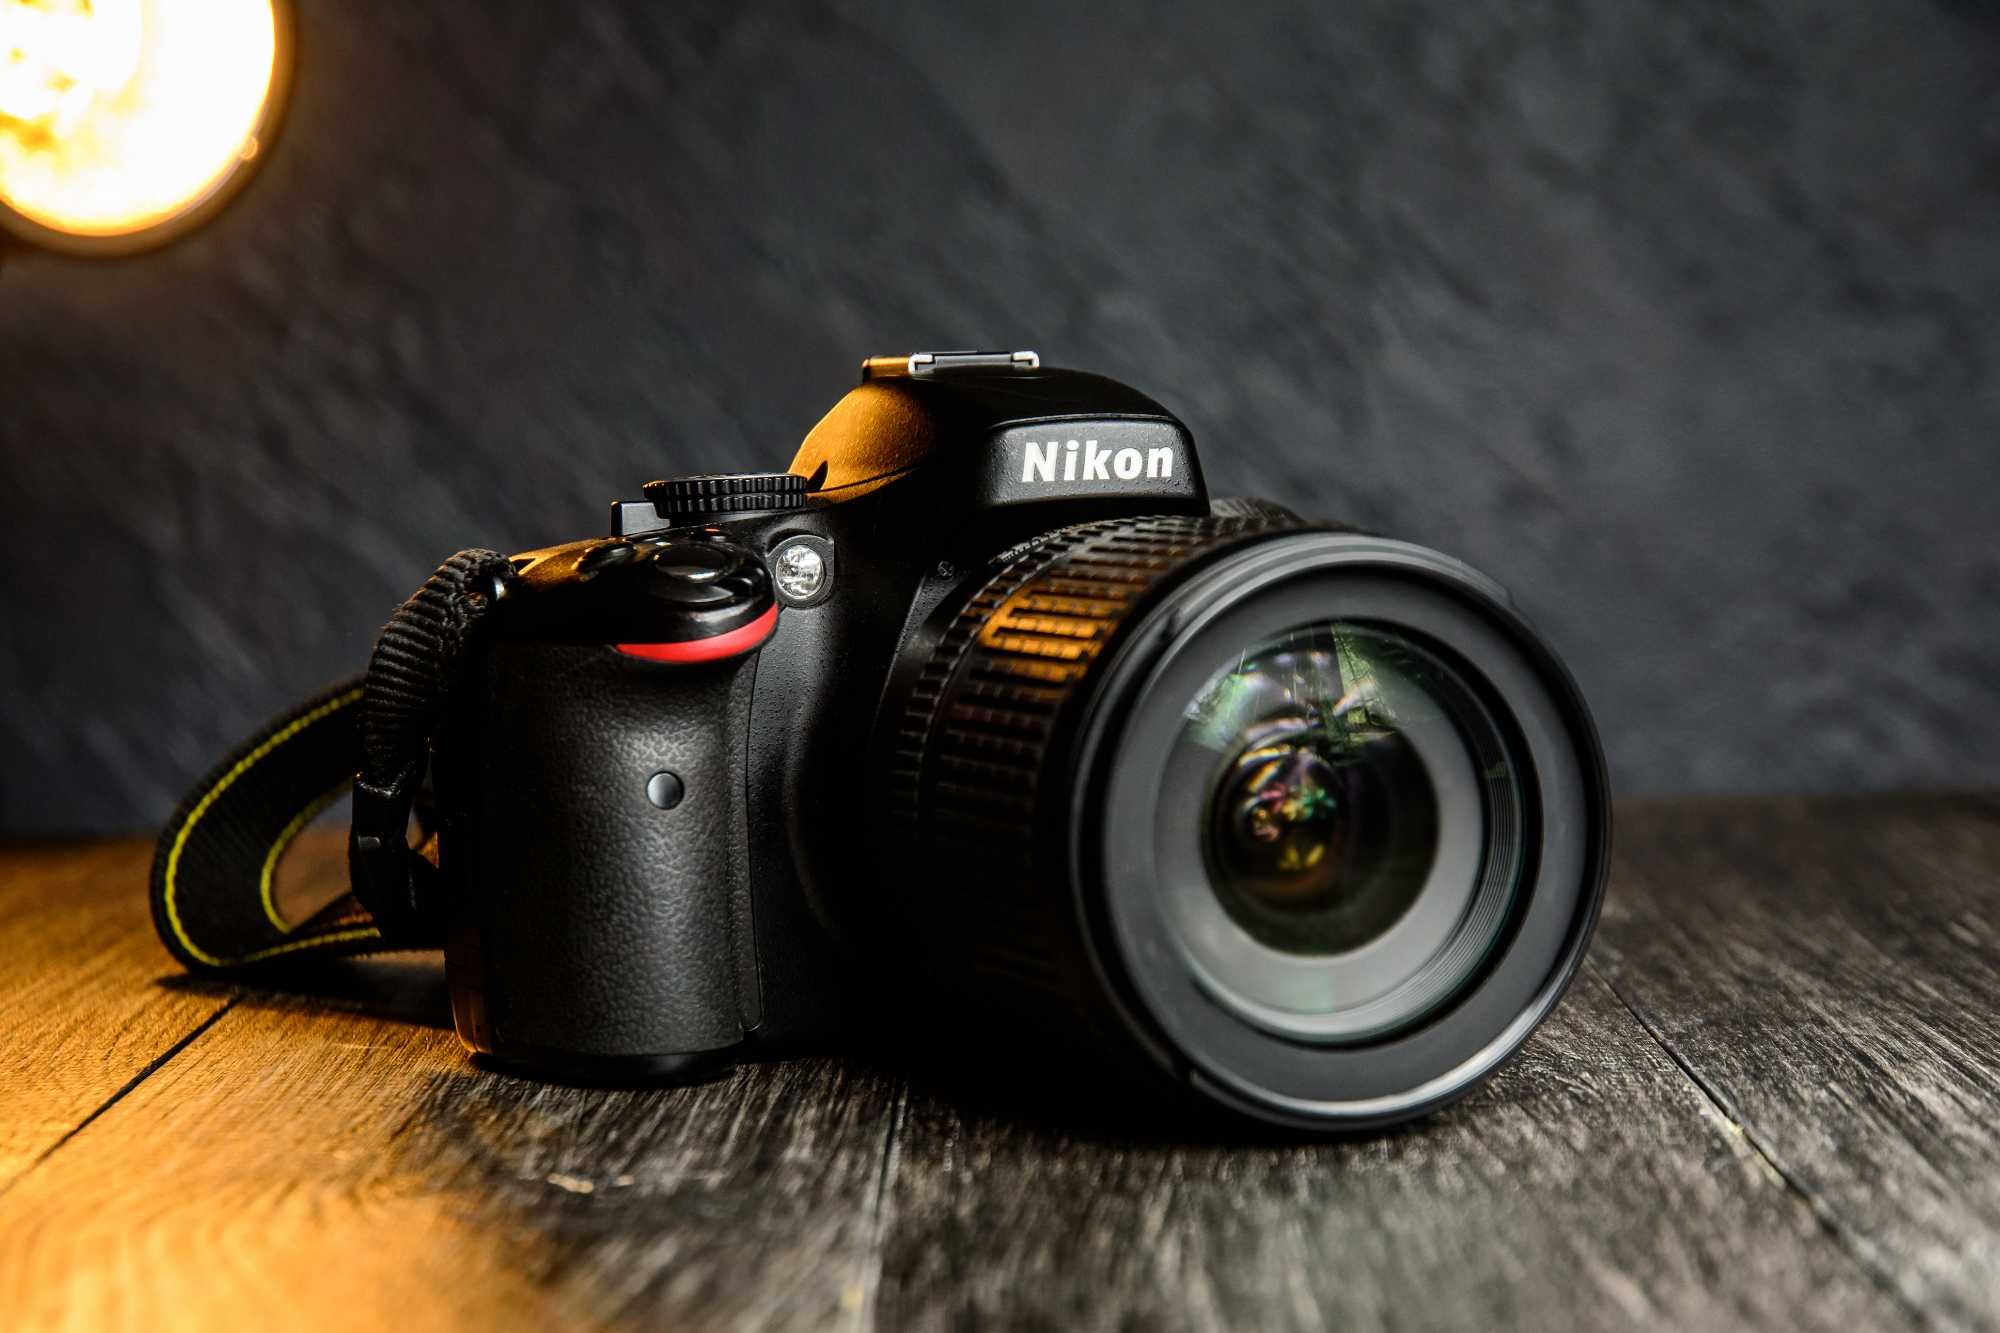 Nikon D5100 + 18-105 f/3.5-5.6G VR